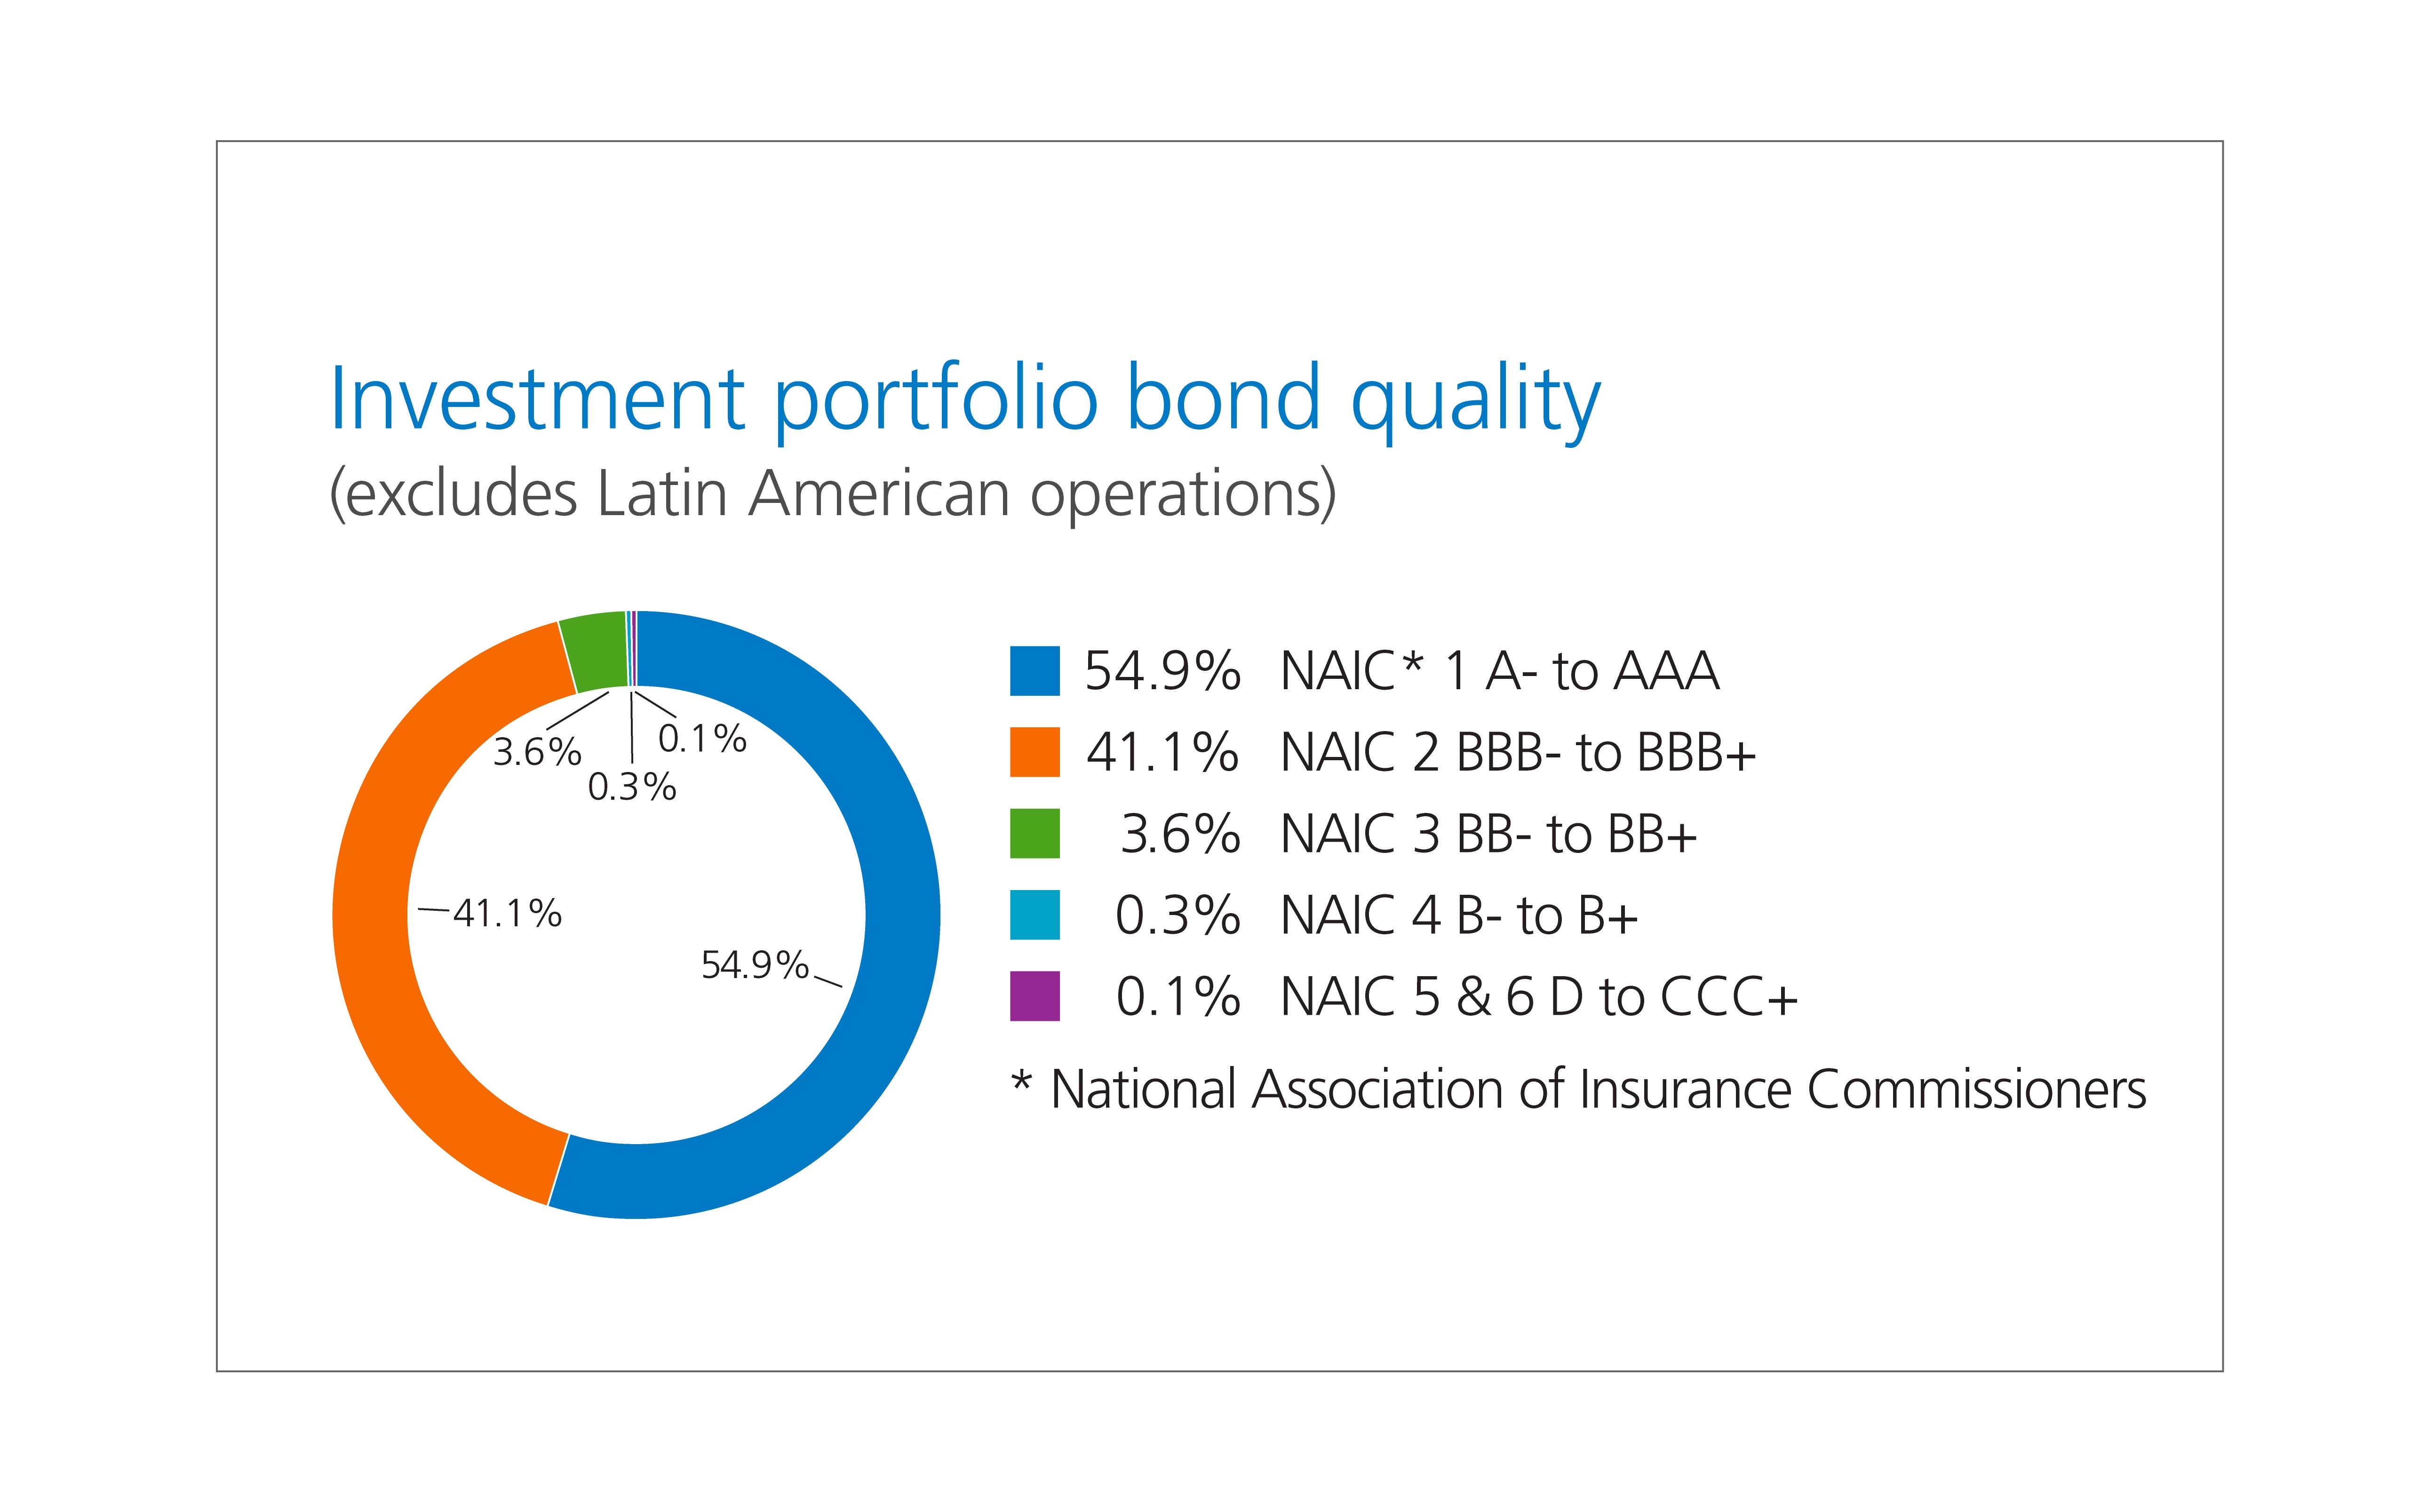 Circle chart showing Investment portfolio bond quality.